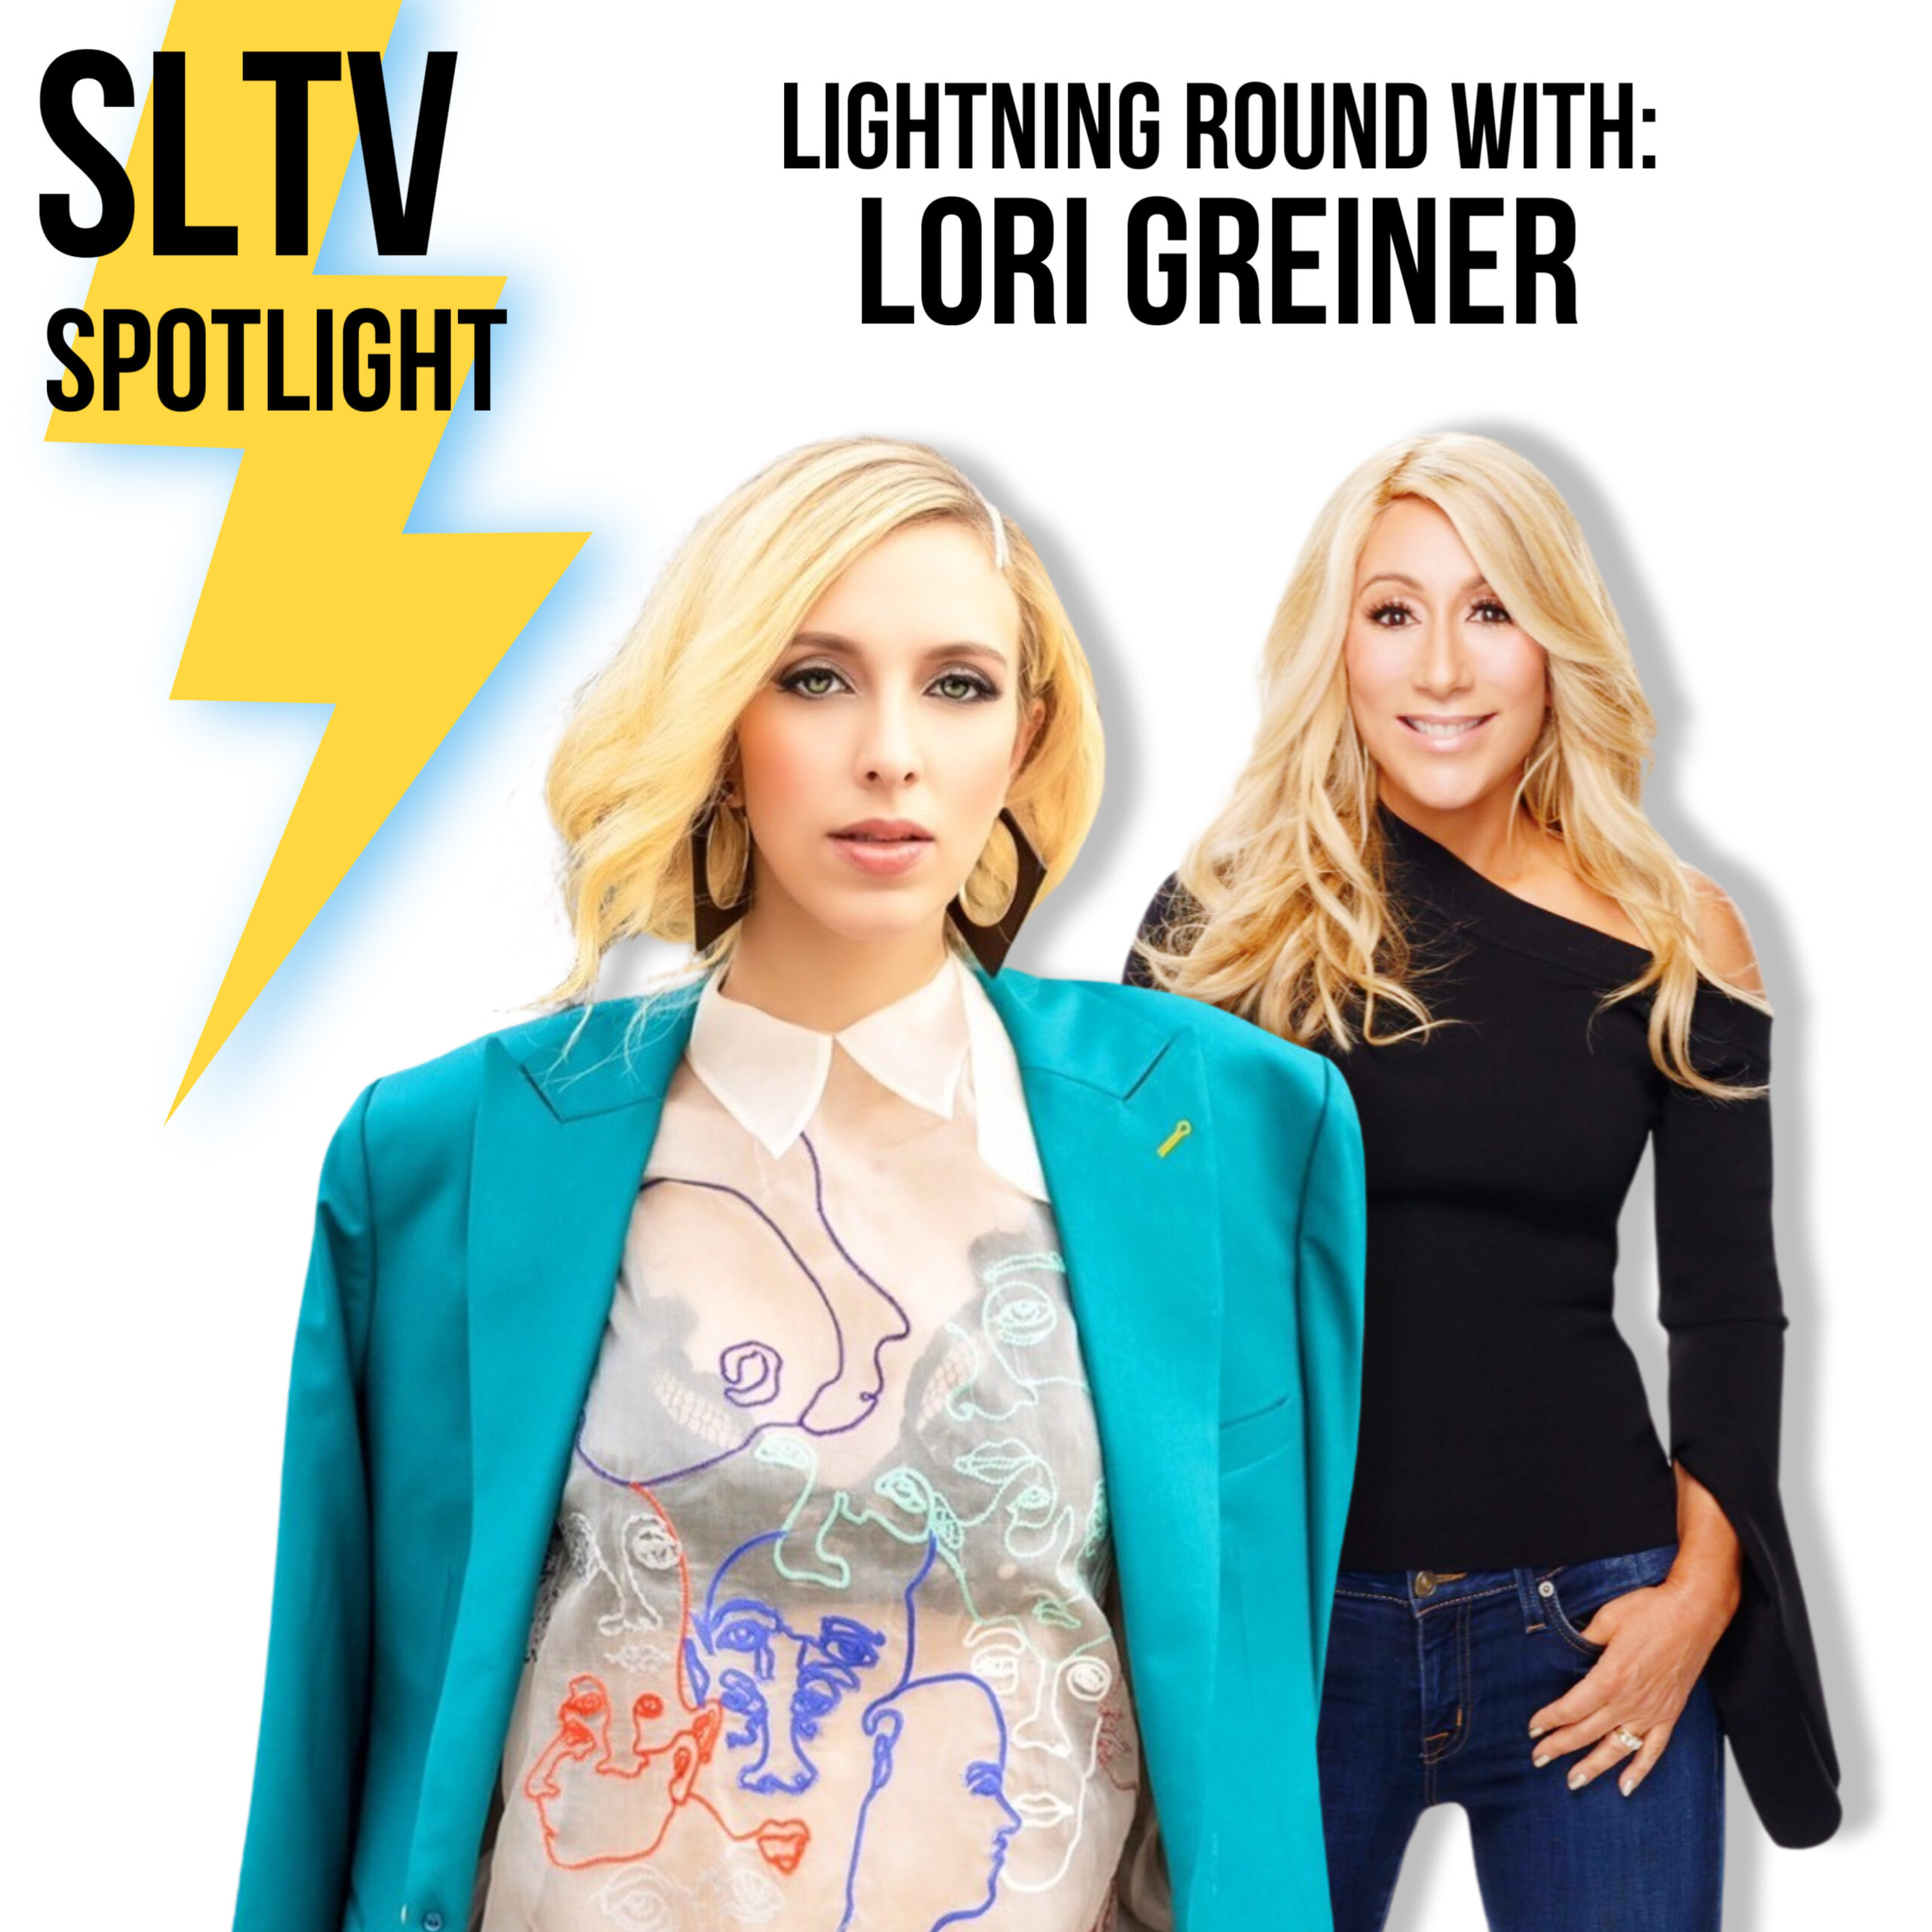 SLTV Spotlight Debuts its Newest Segment: "Lightning Rounds" with Shark Tank's Lori Greiner